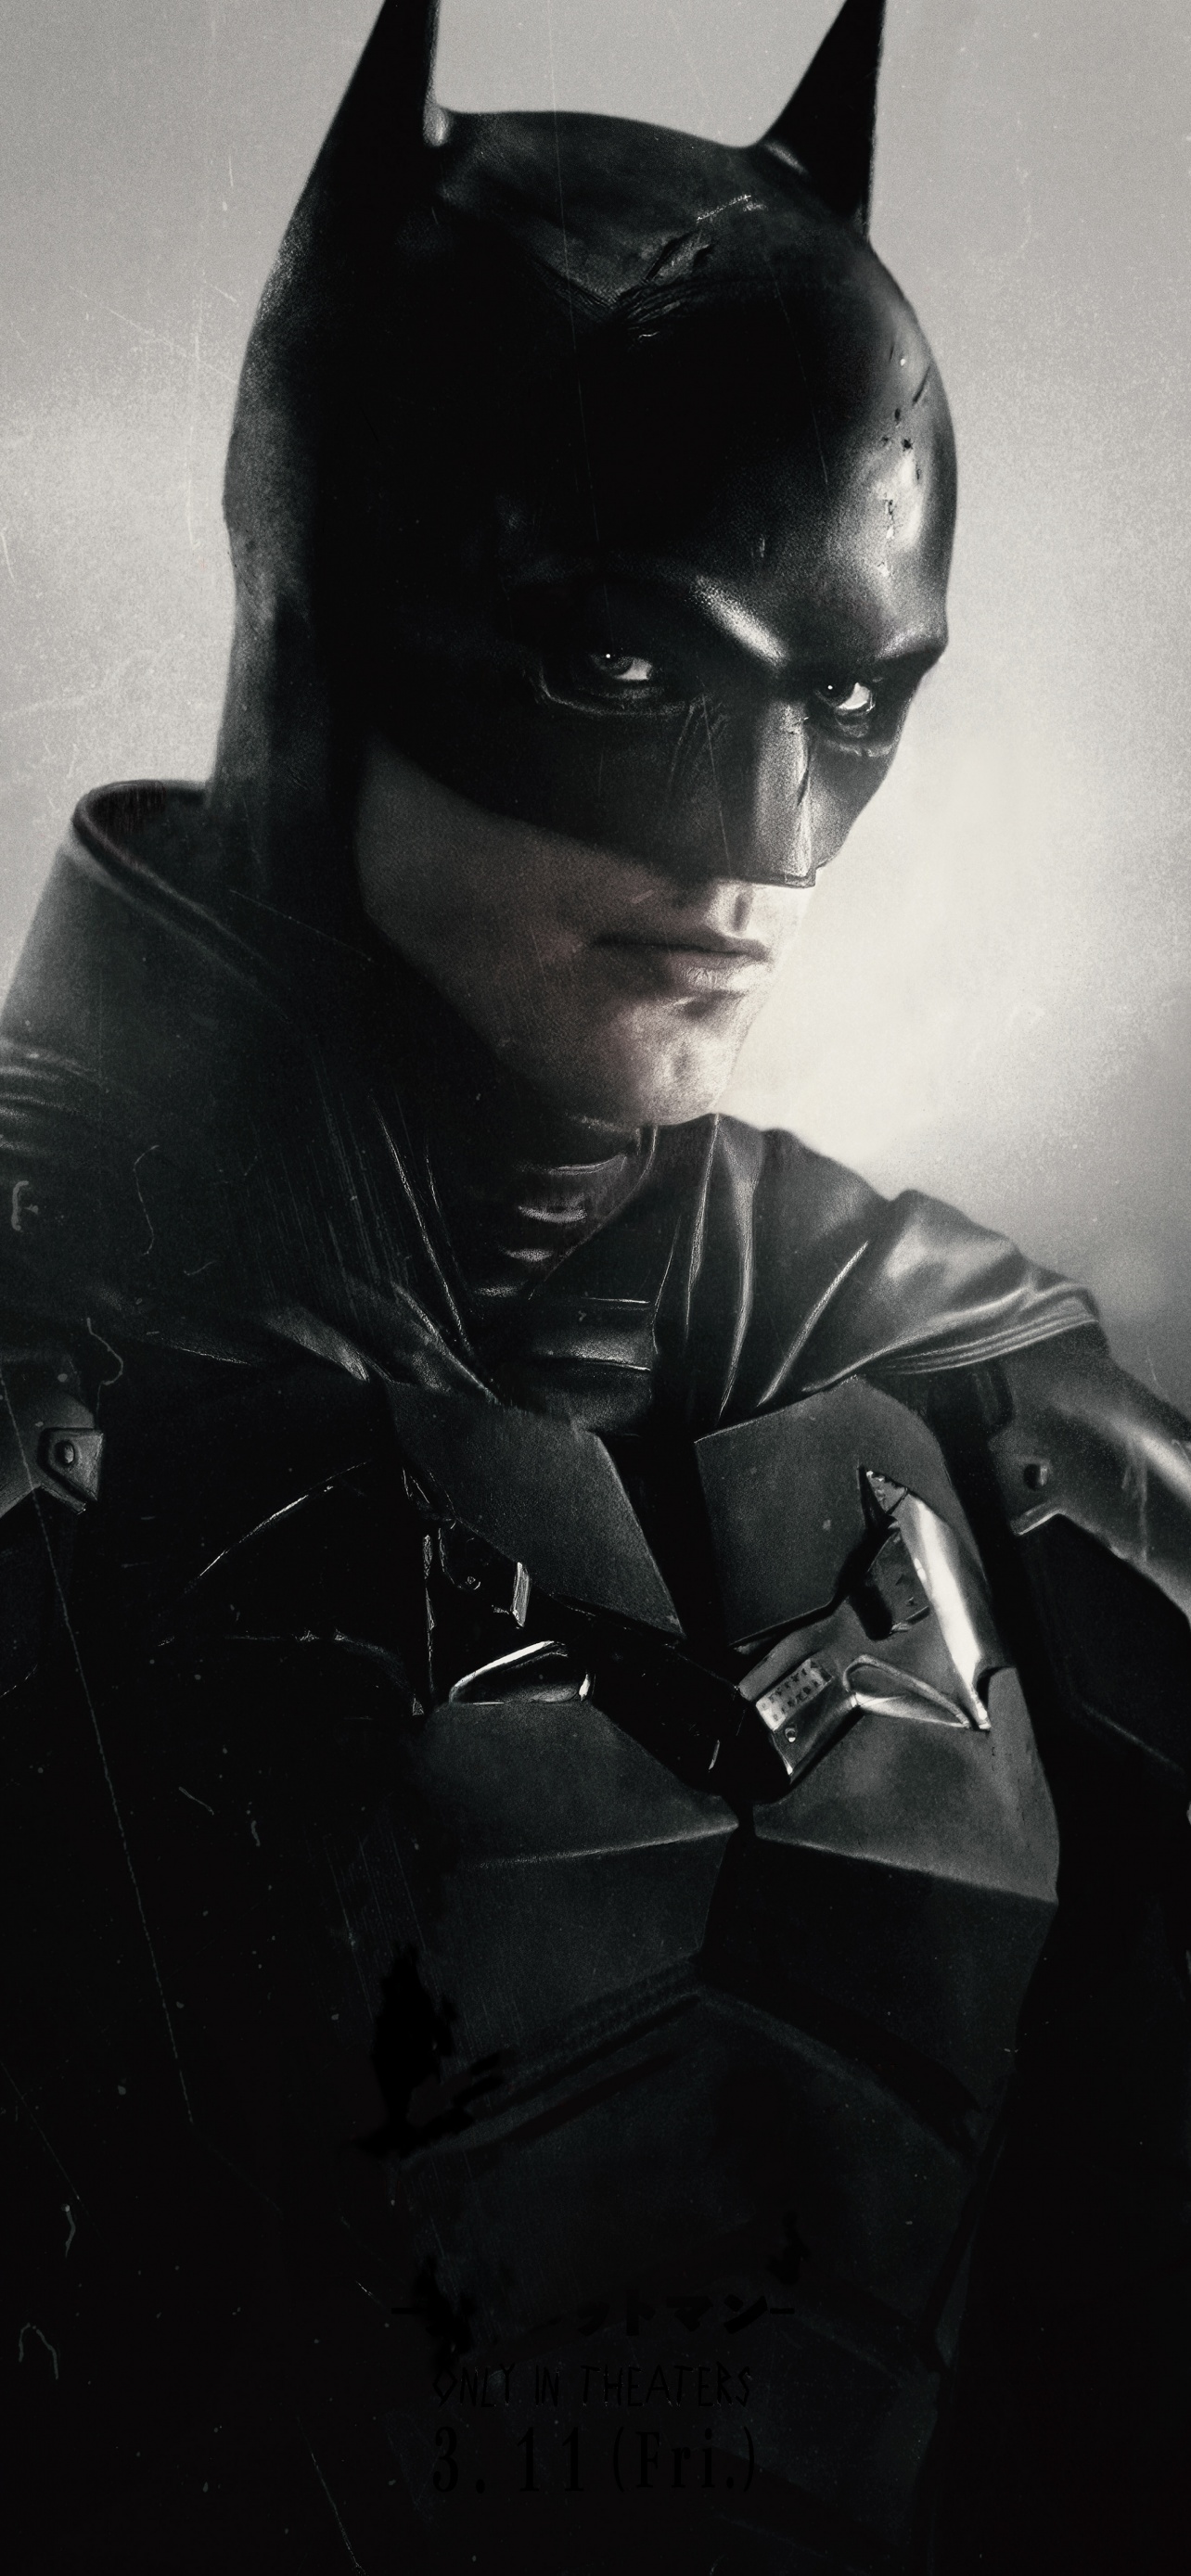 The Batman (2022) 4K Wallpaper for iPhone